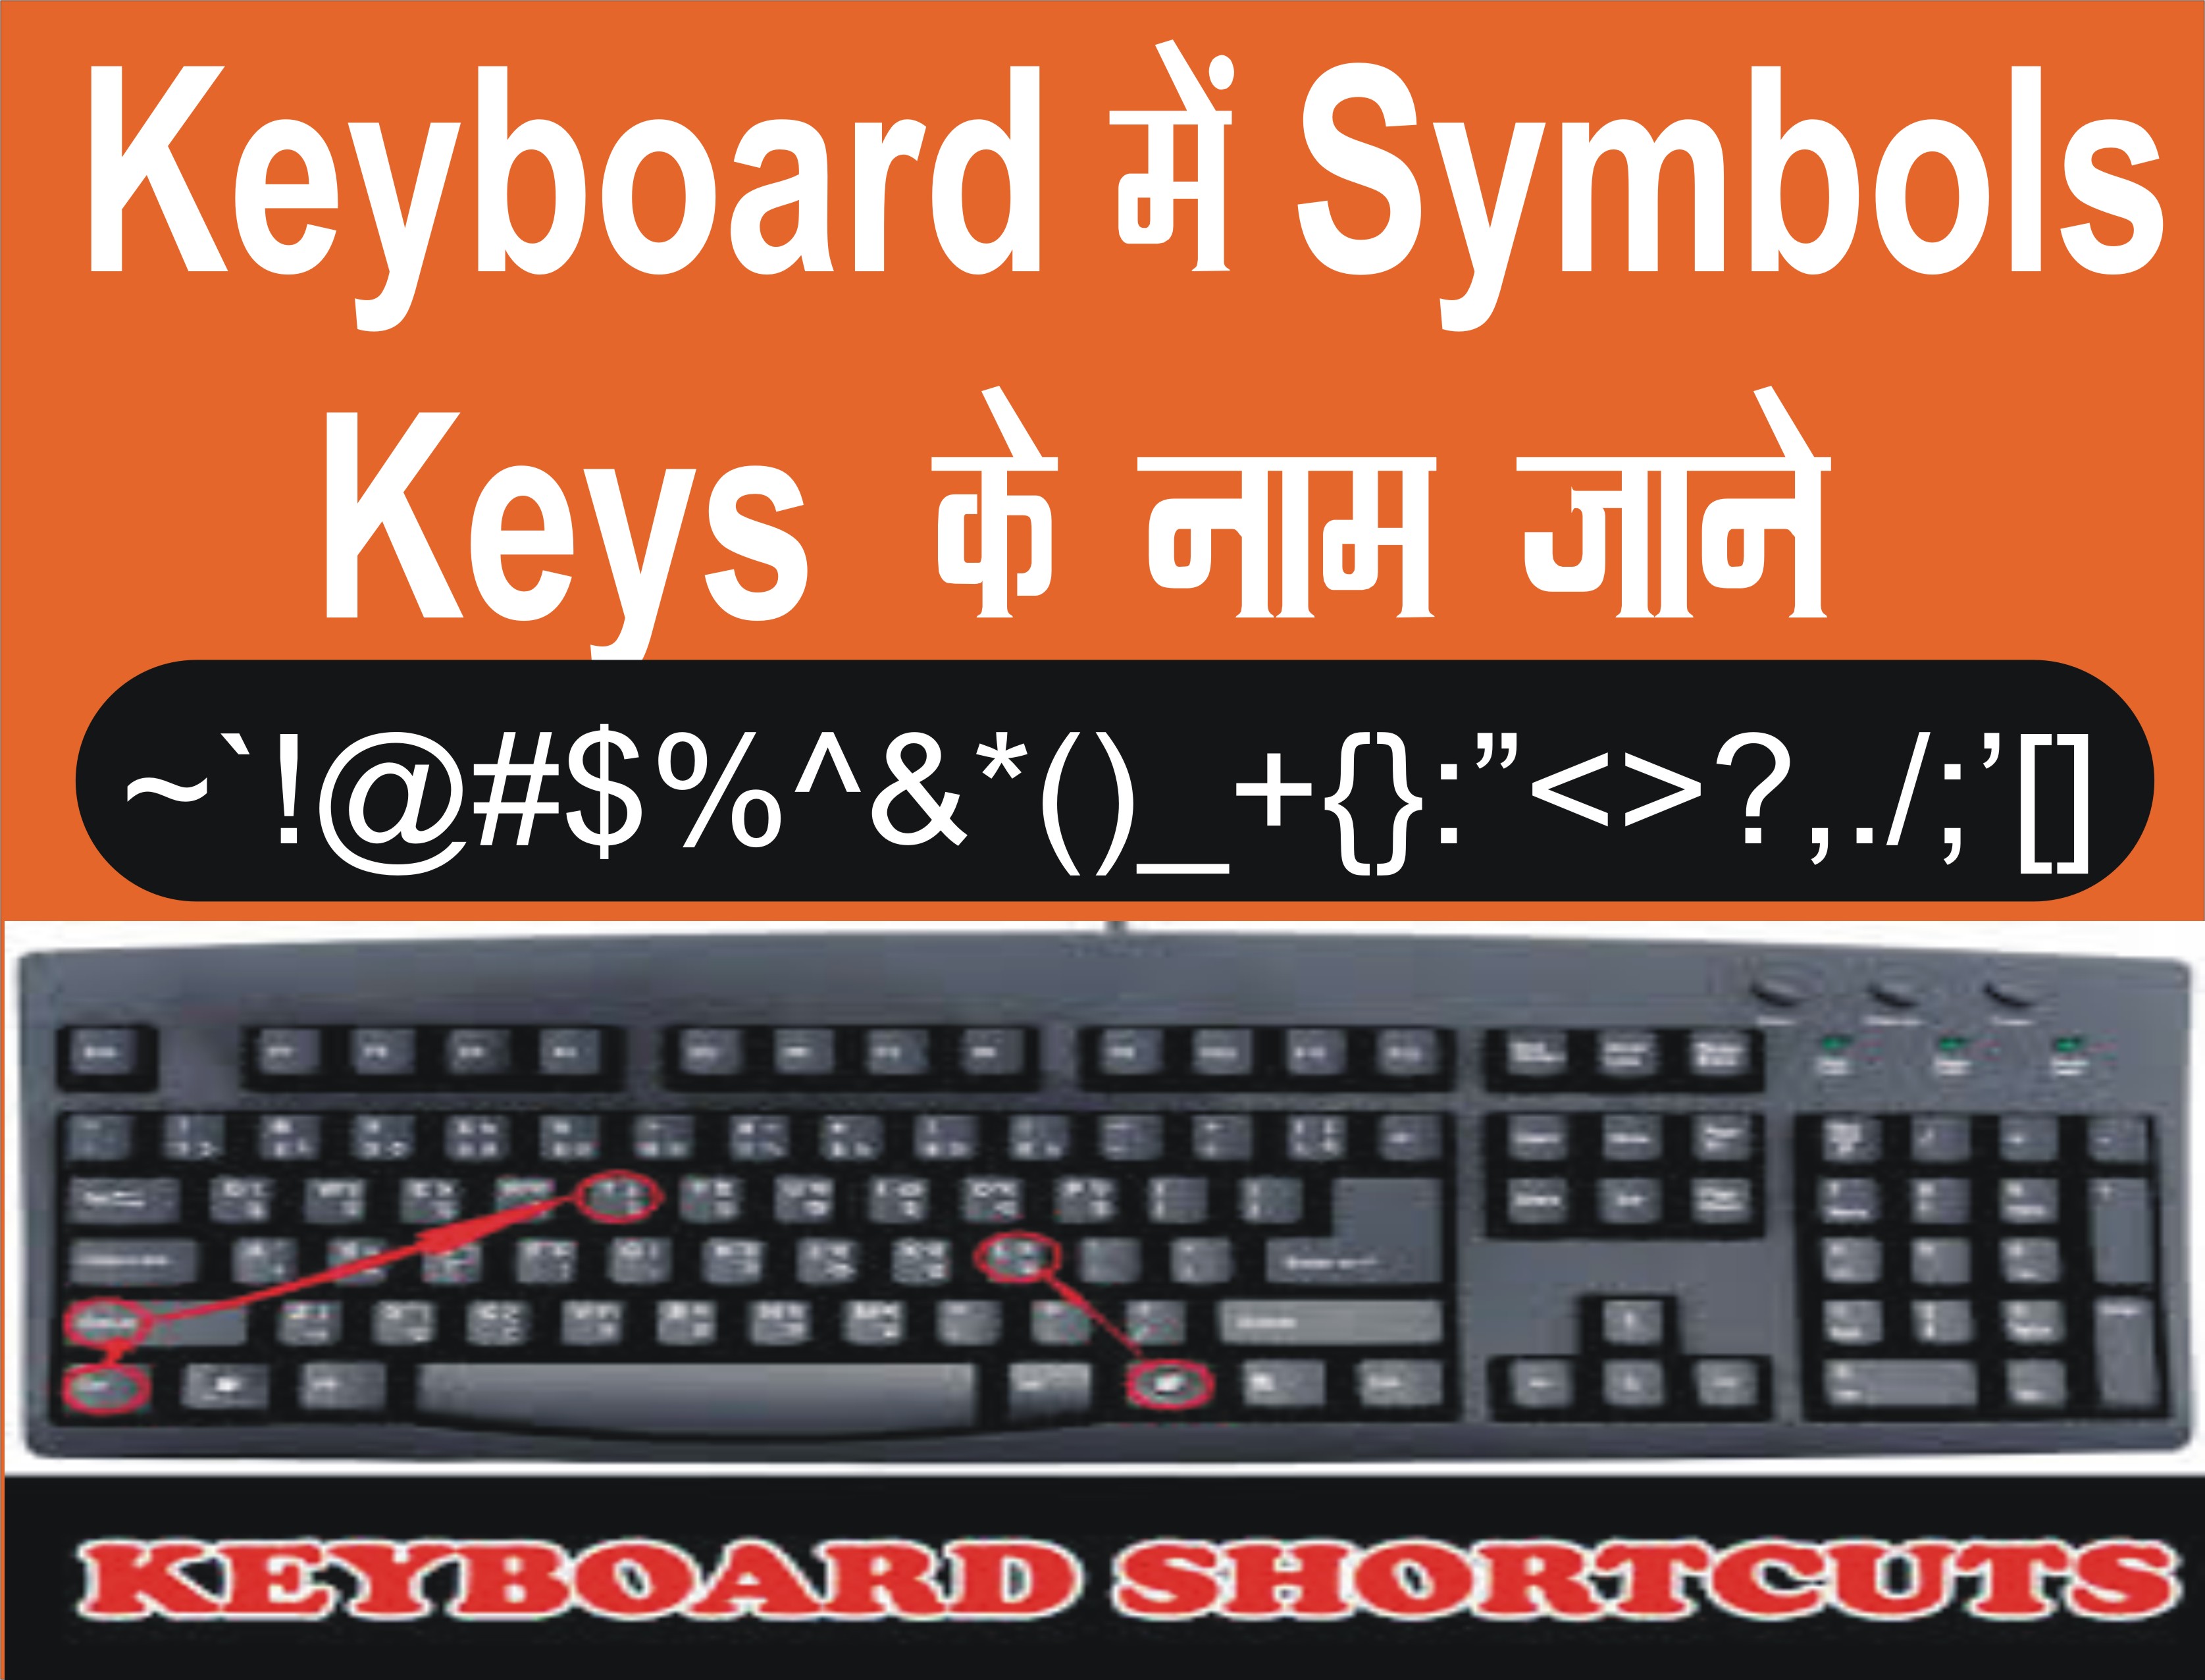 About keyboard symbol